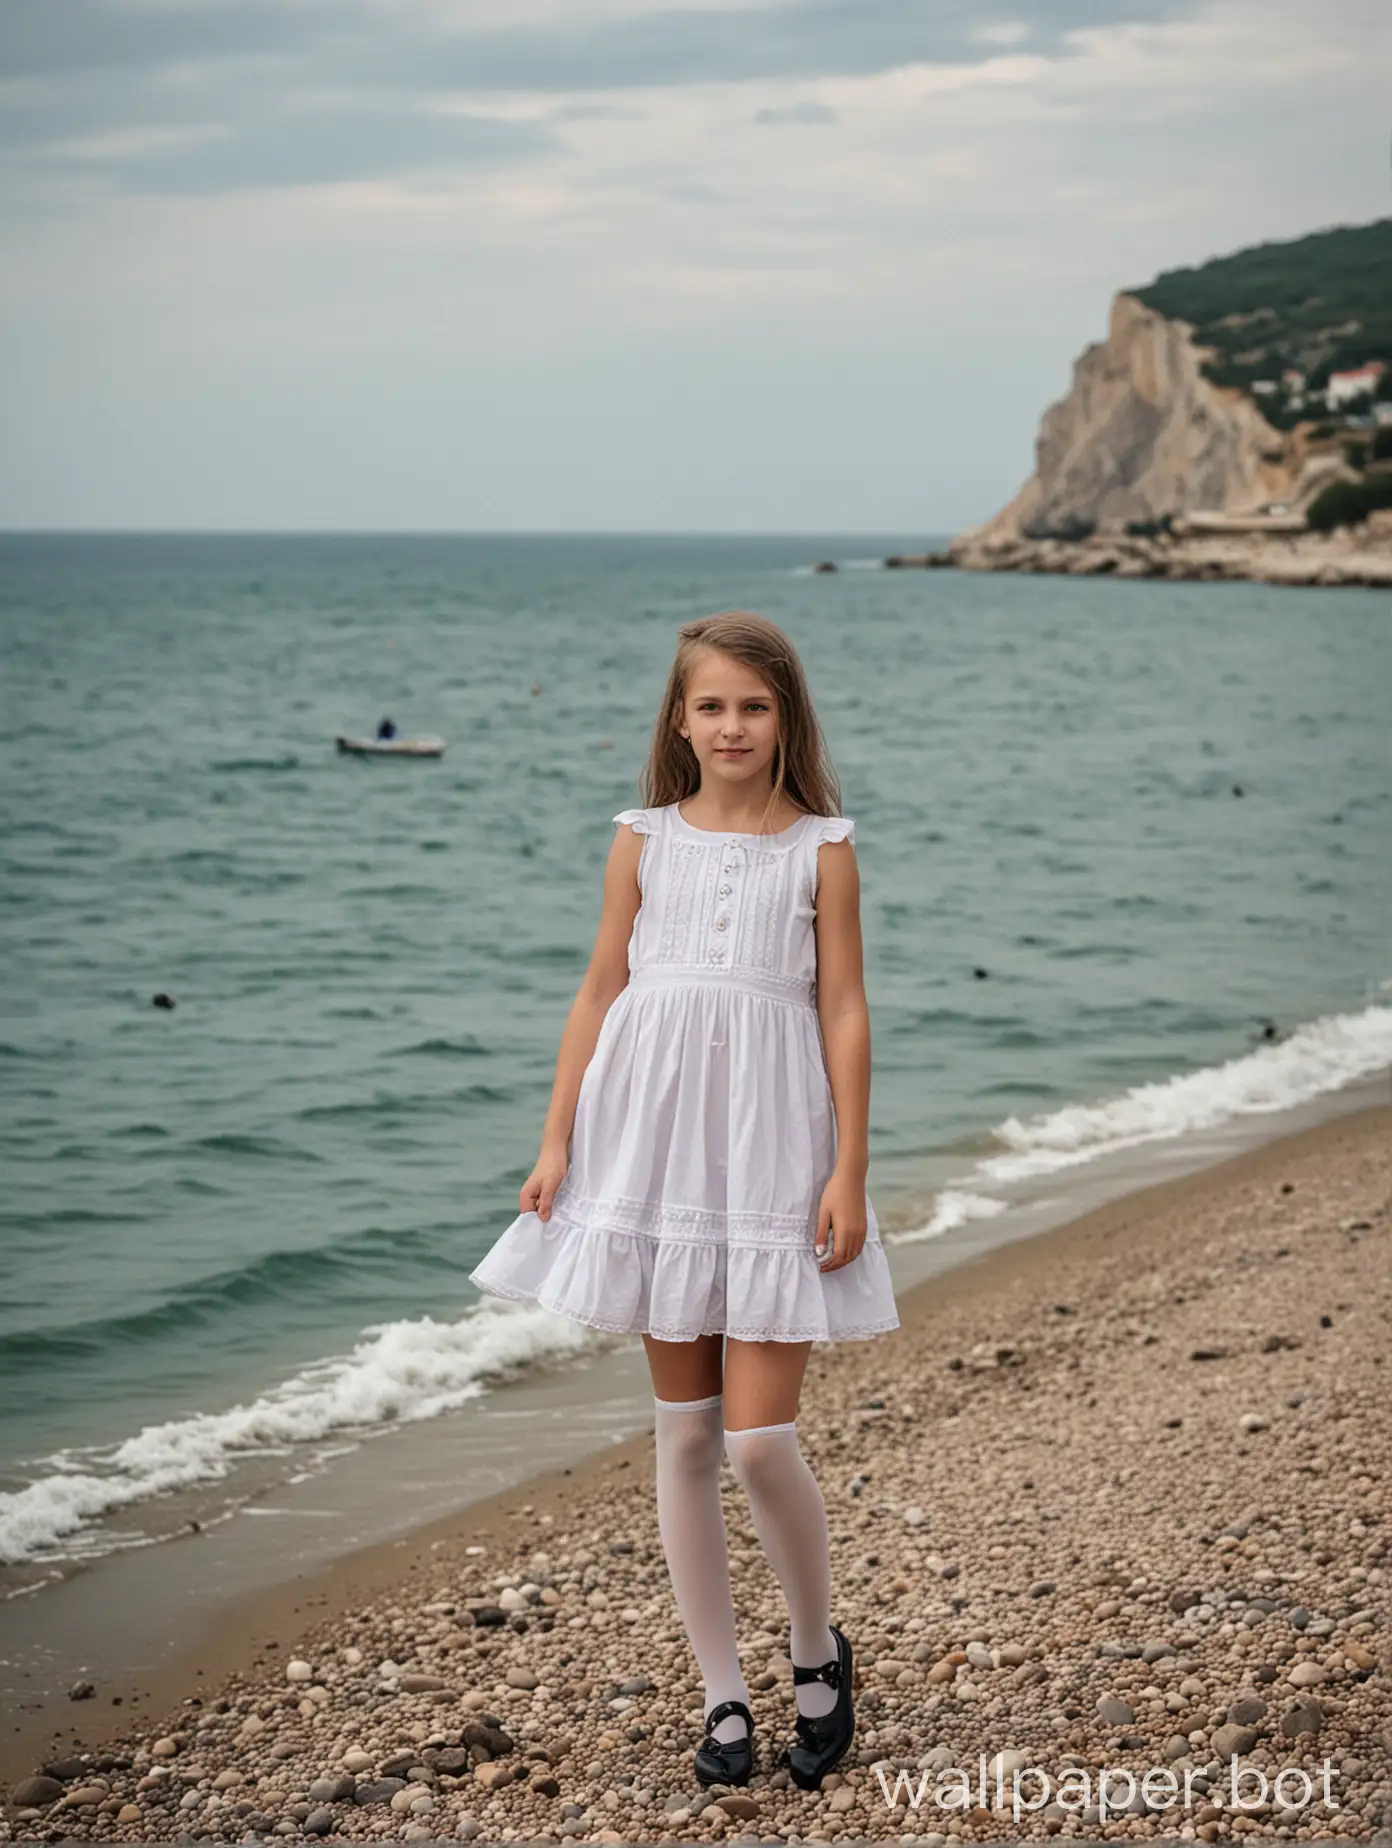 Seaside-Serenity-10YearOld-Girl-in-Elegant-Dress-by-the-Crimea-Coastline